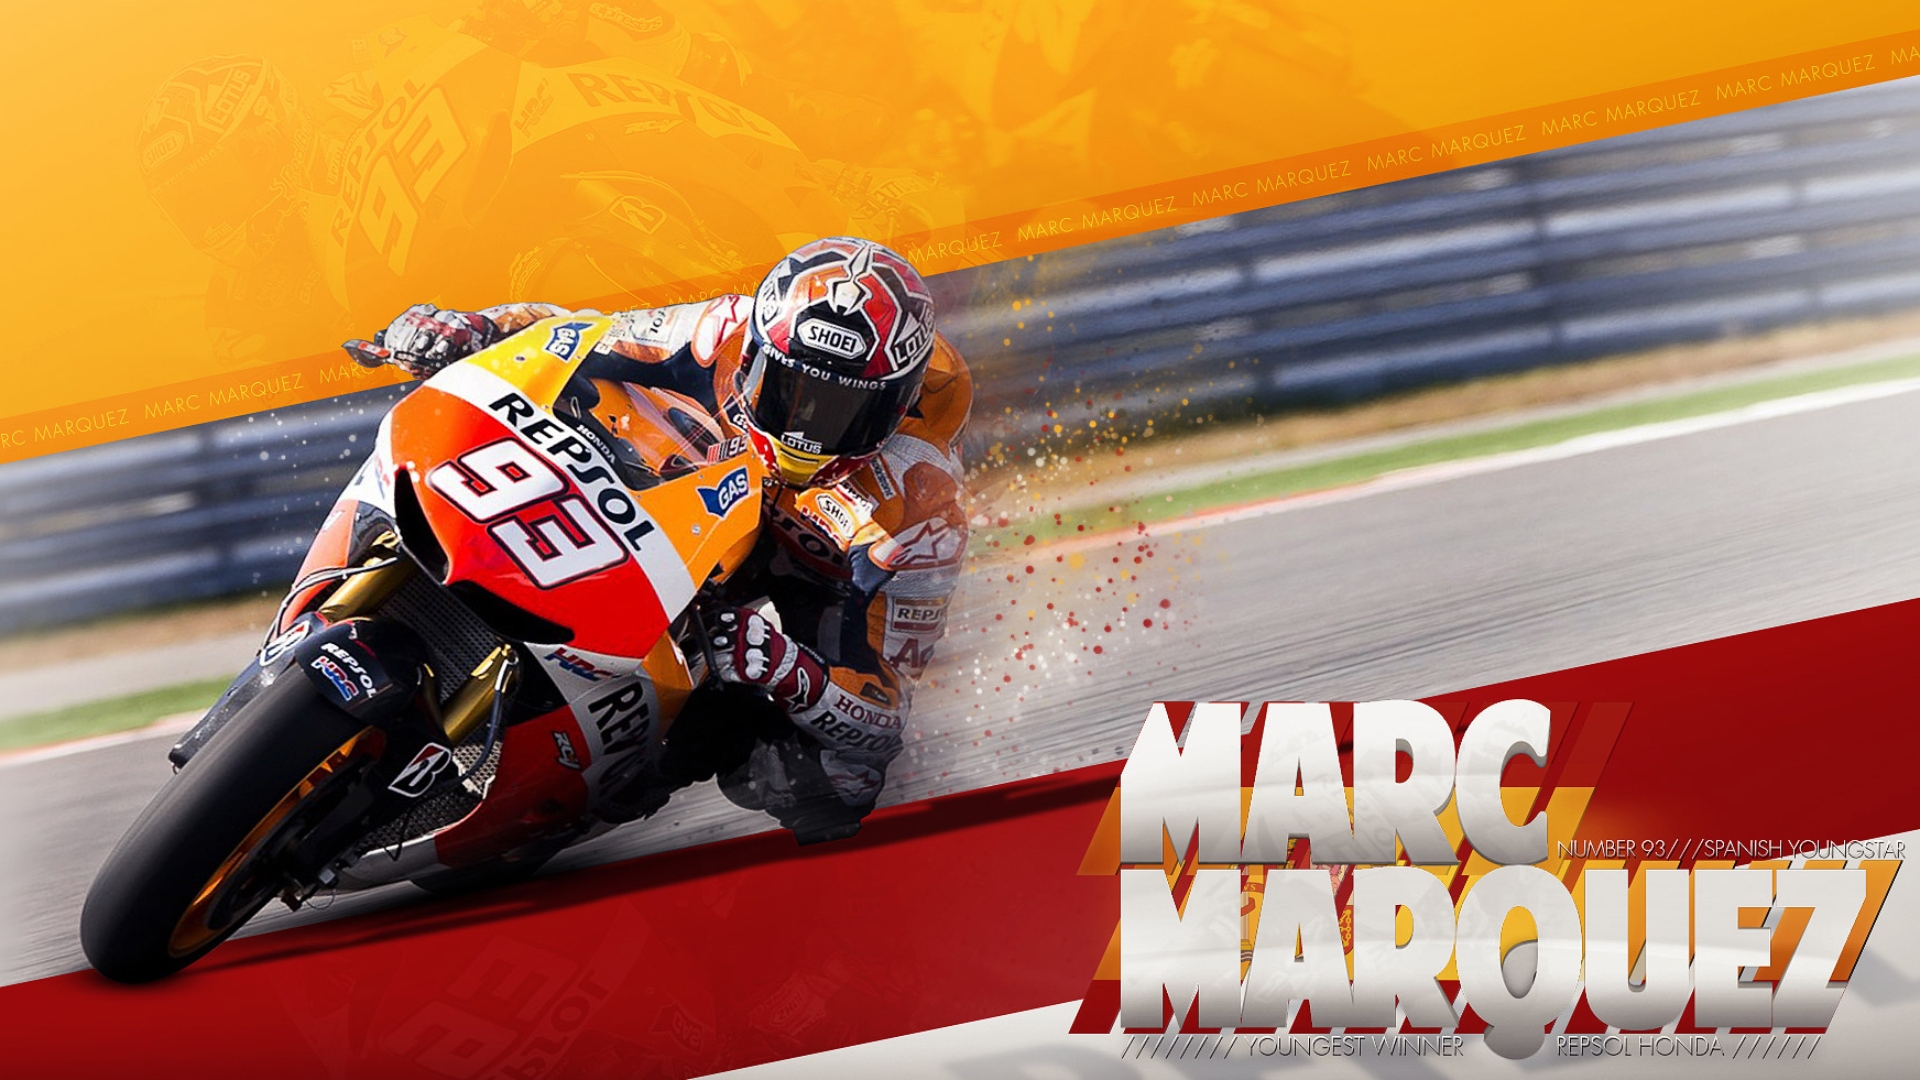 People 1920x1080 Marc Marquez Repsol Honda motorcycle Moto GP racing sport motorsport vehicle